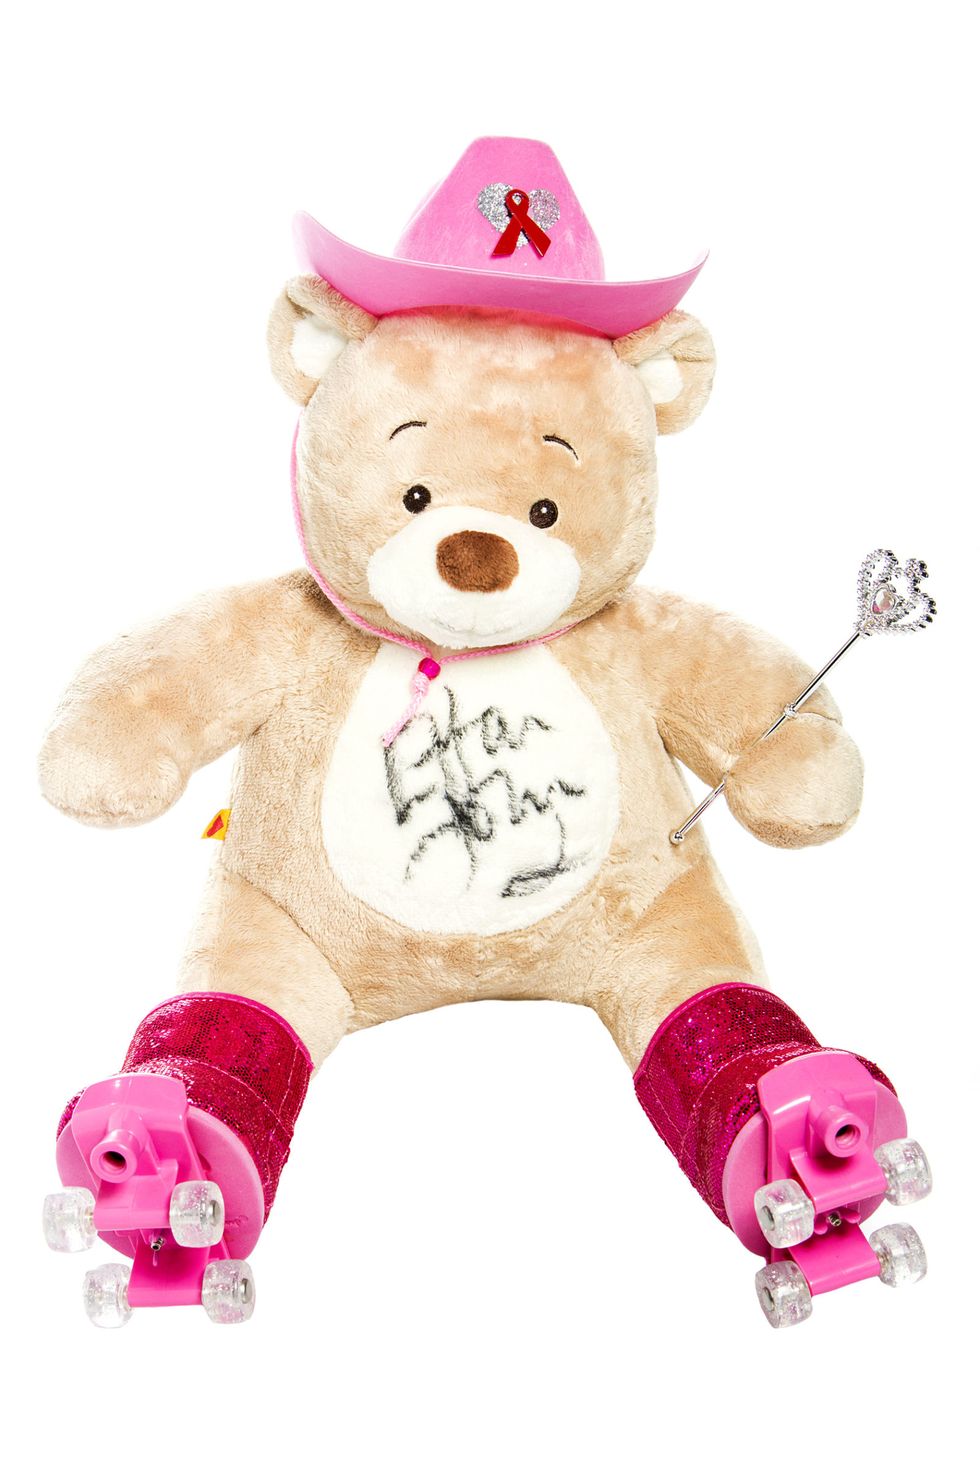 Stuffed toy, Toy, Pink, Teddy bear, Magenta, Baby toys, Plush, Costume accessory, Bear, Beige, 